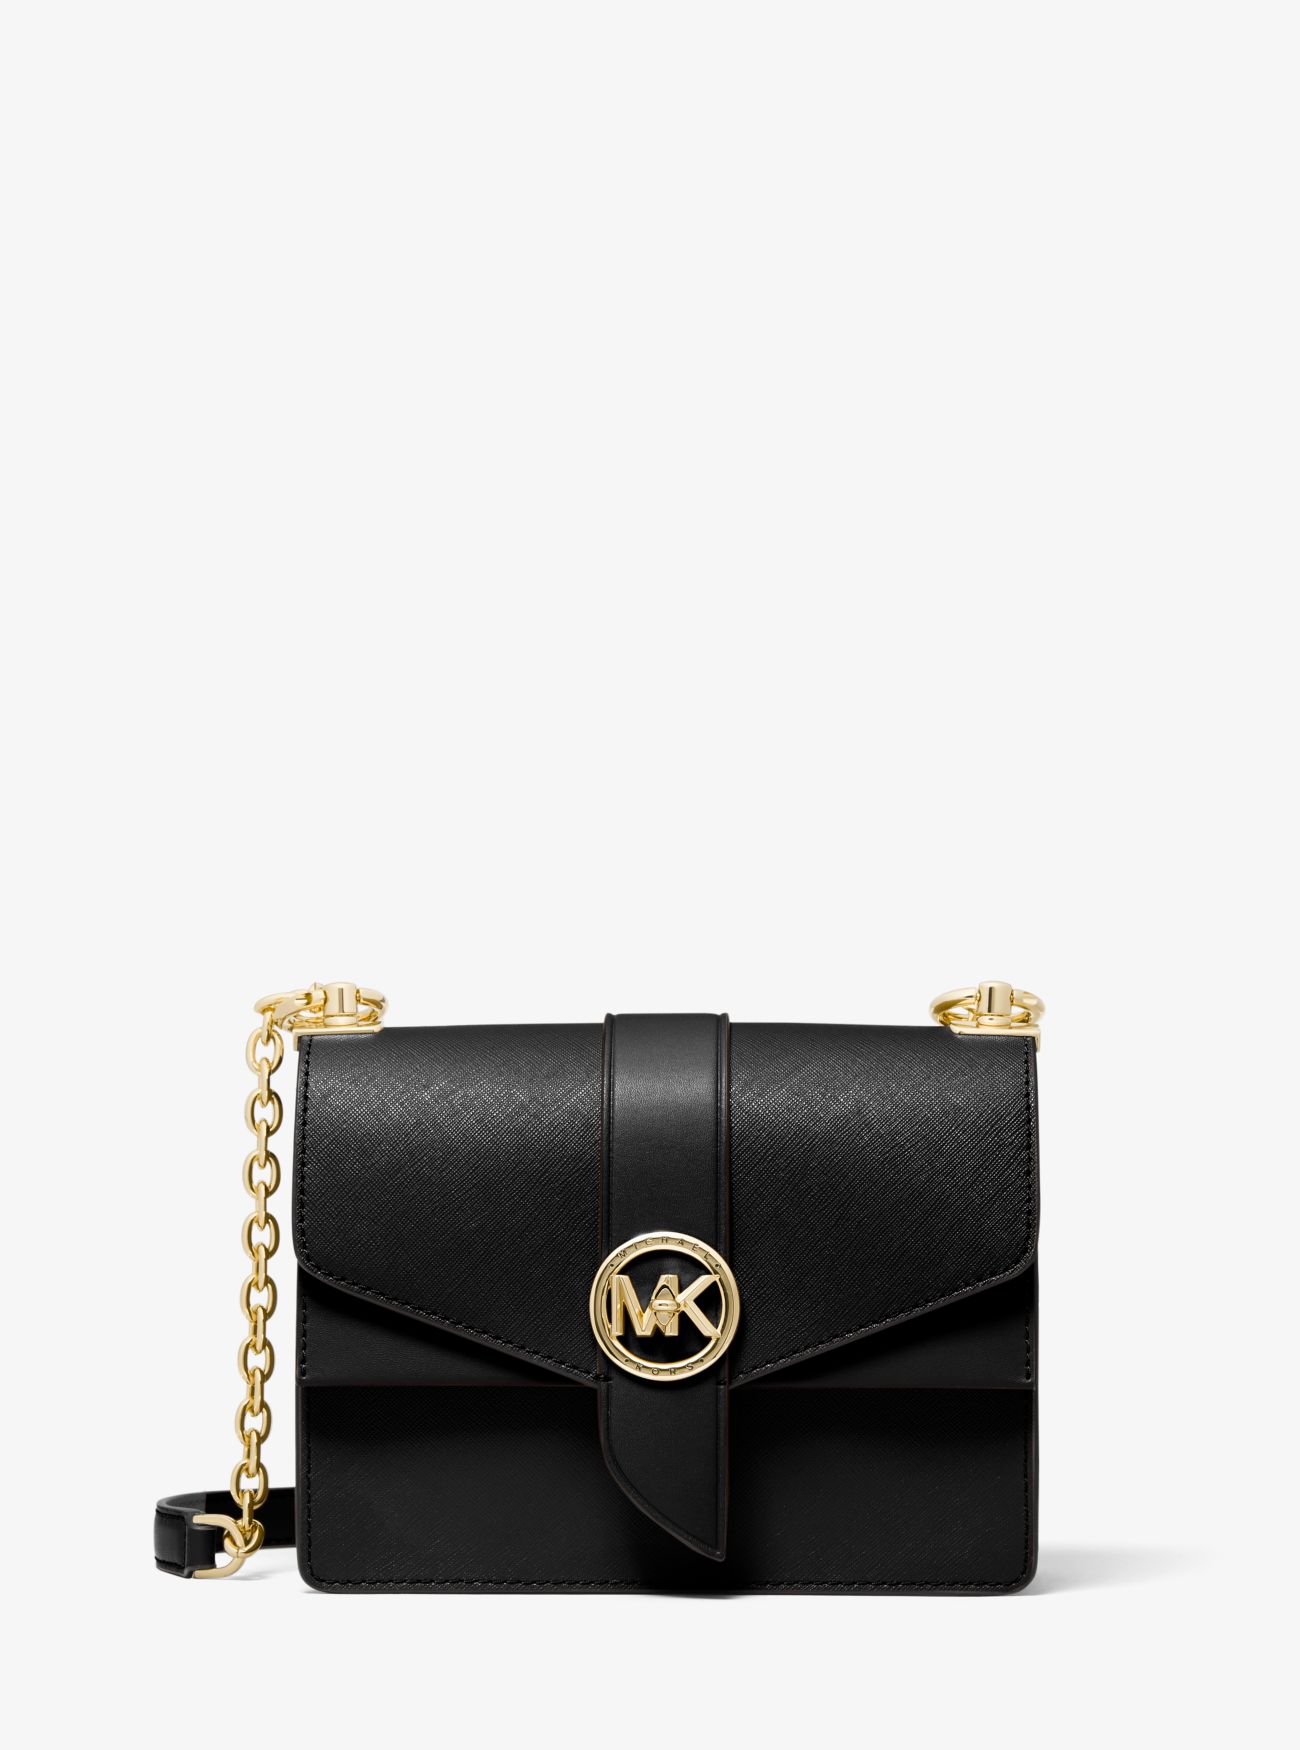 MK Greenwich Small Saffiano Leather Crossbody Bag - Black - Michael Kors